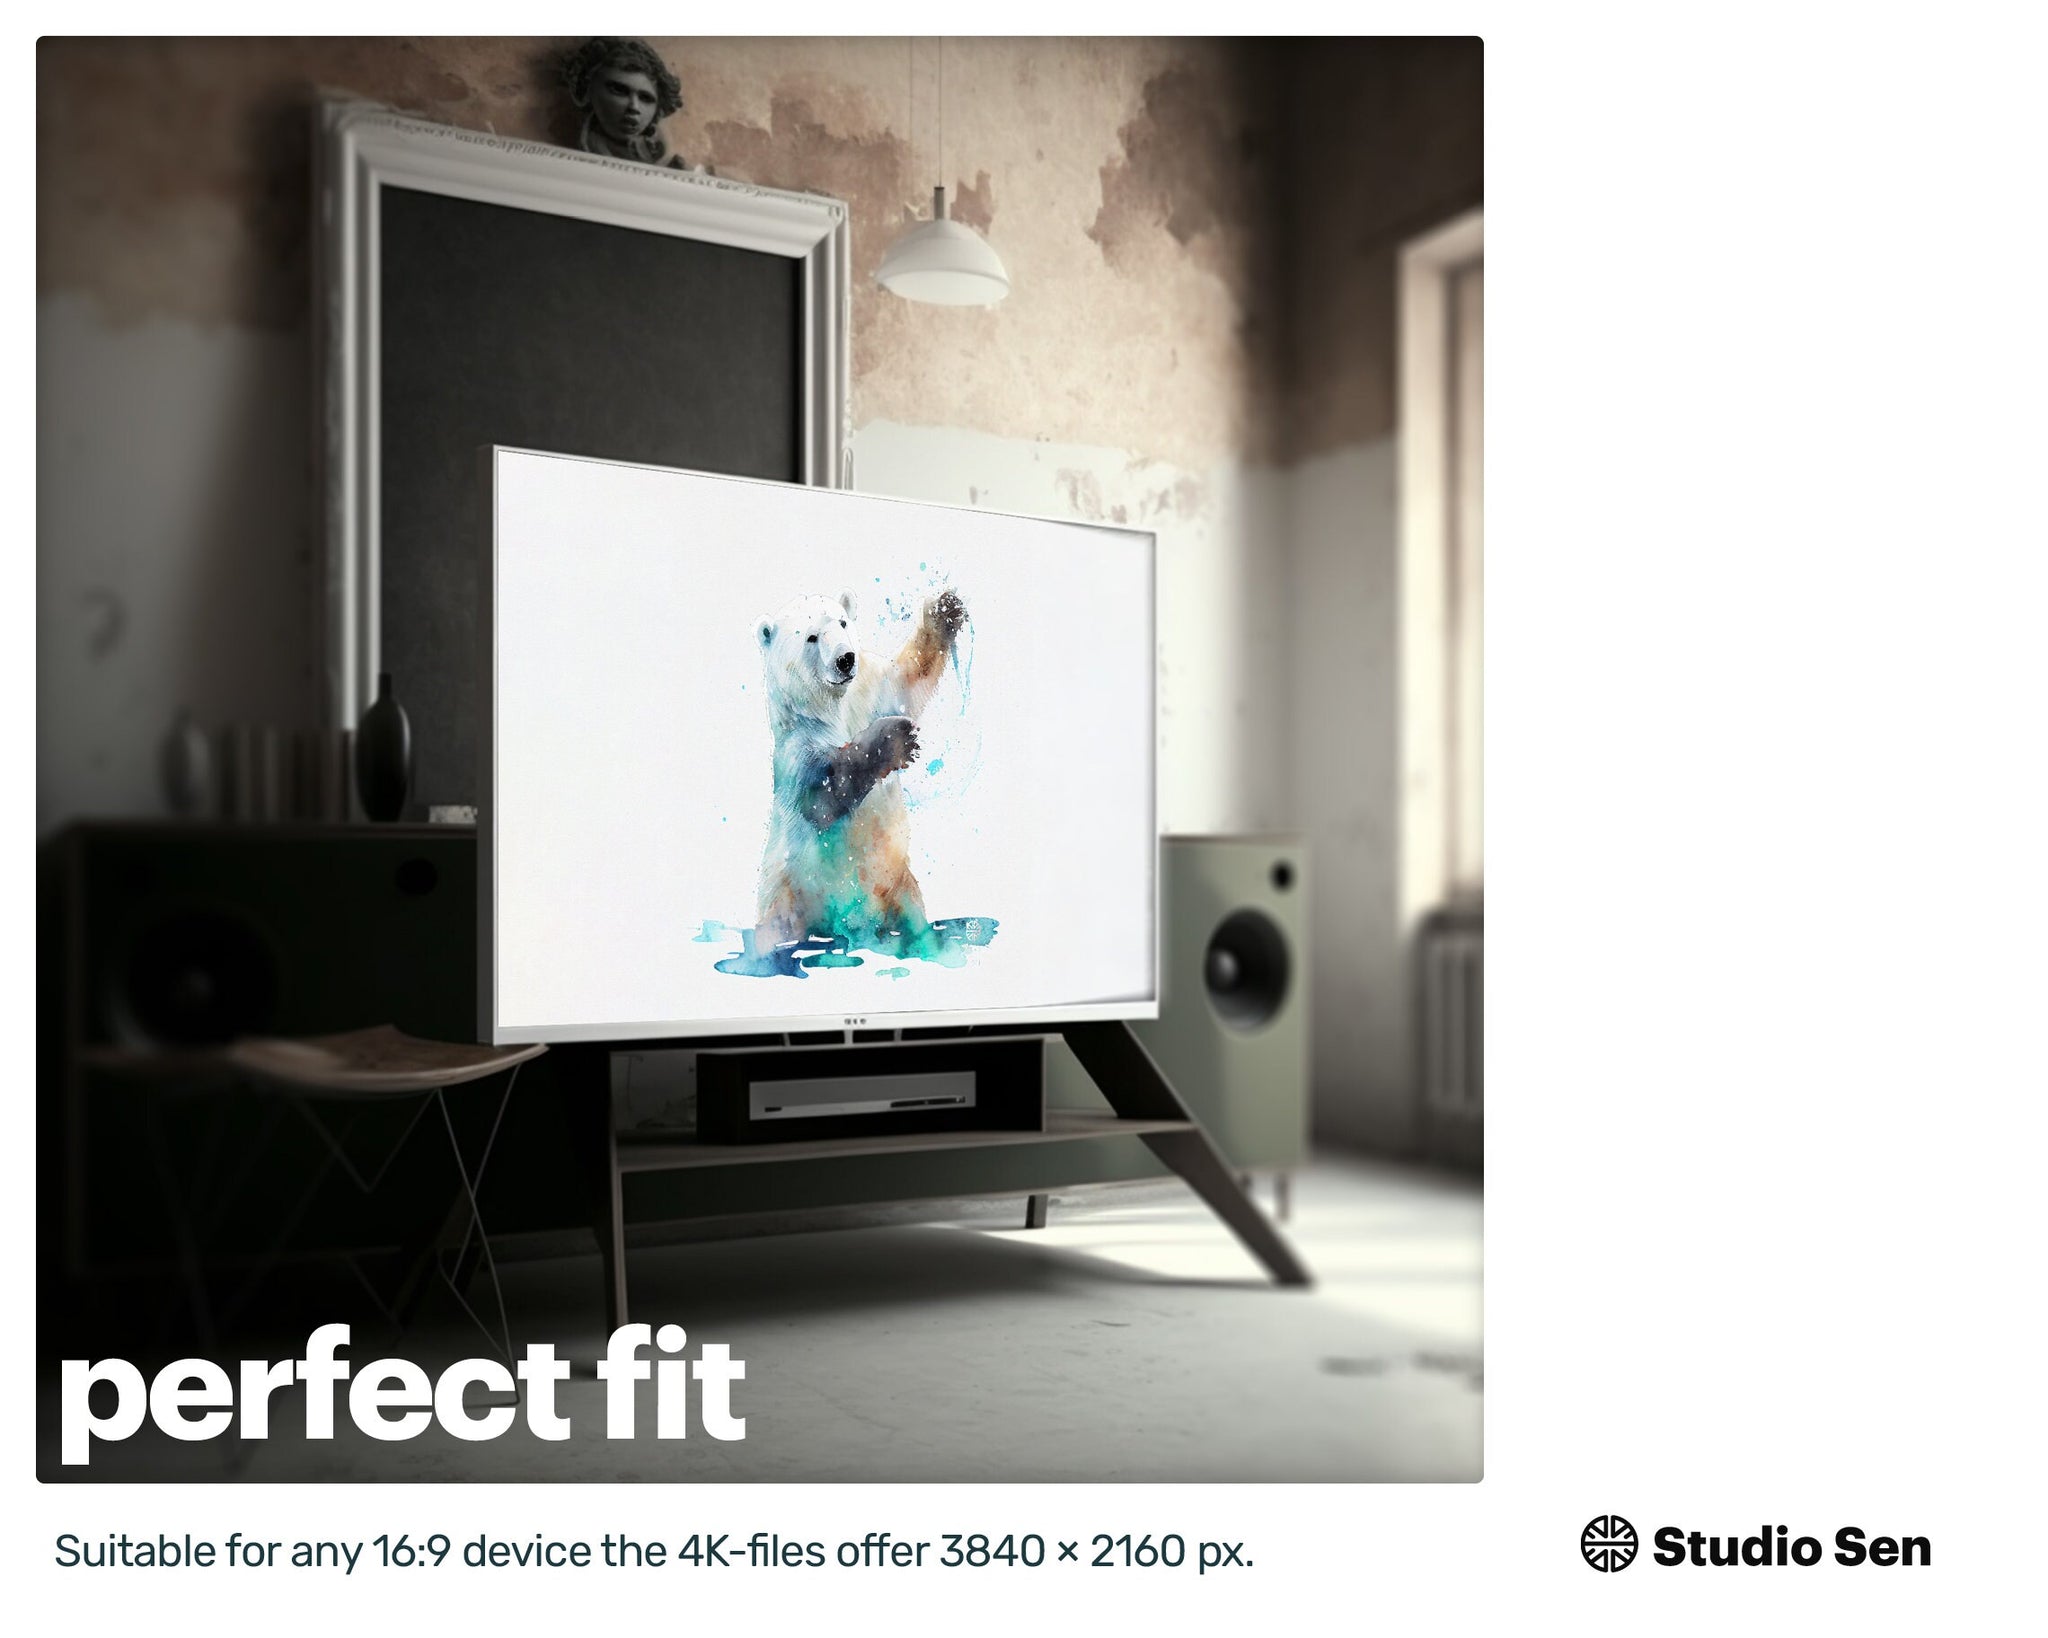 Samsung Art TV, Polar Bear, premium download, drops and splashes, friendly wallpaper, art for kids